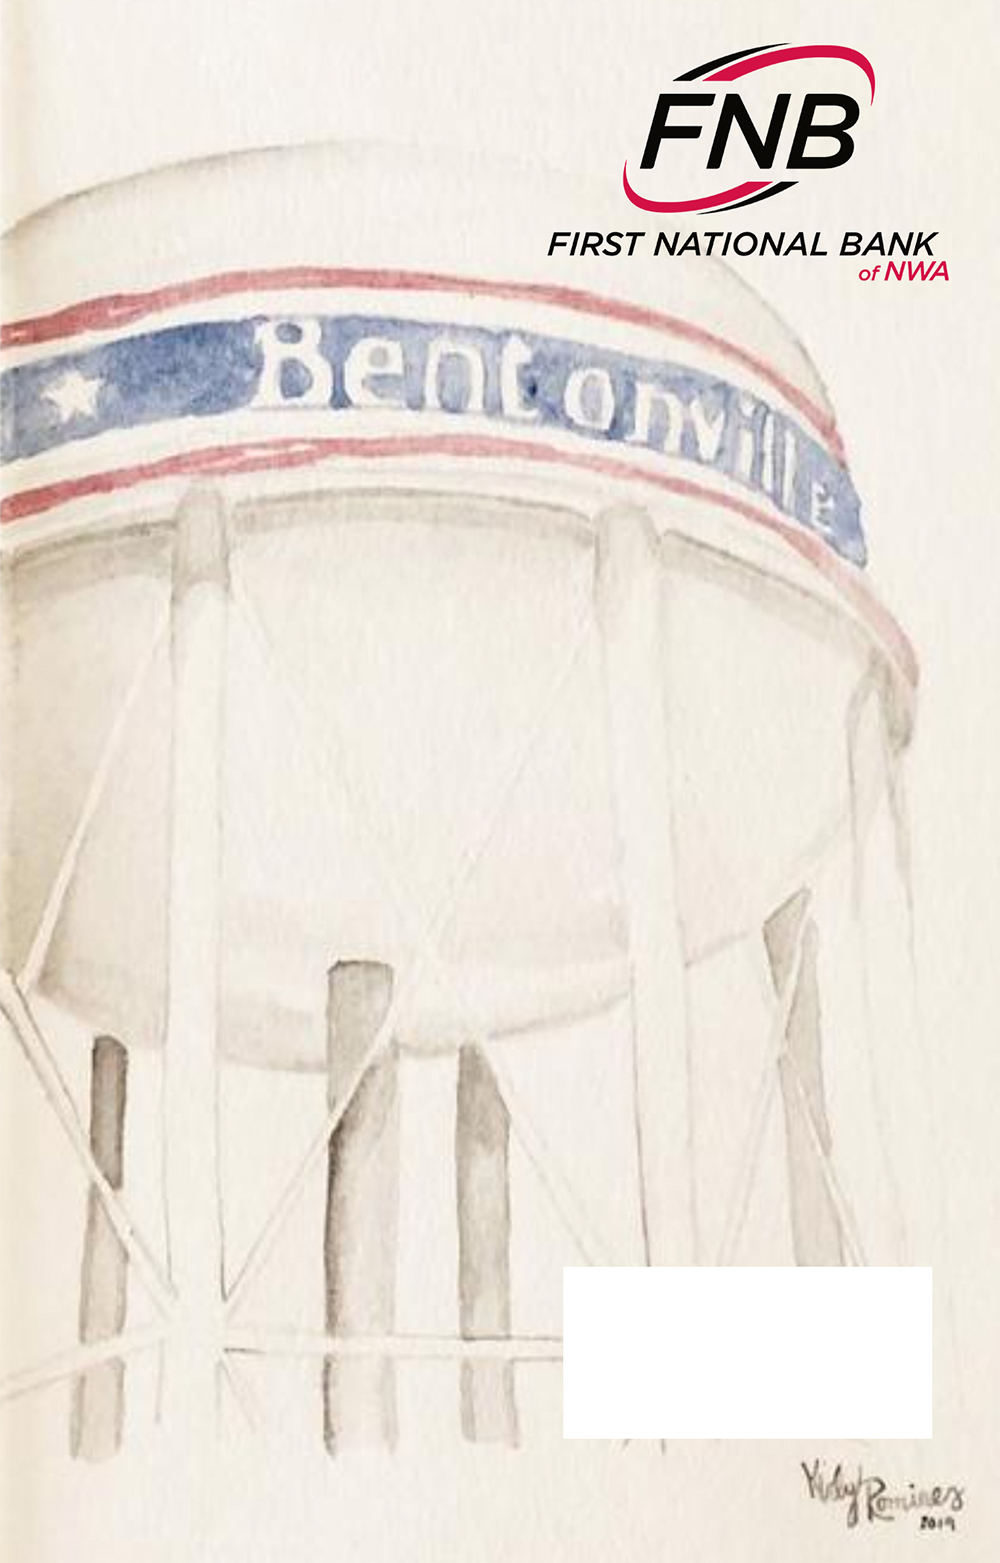 Diseño de la tarjeta de débito de la torre de agua de Bentonville